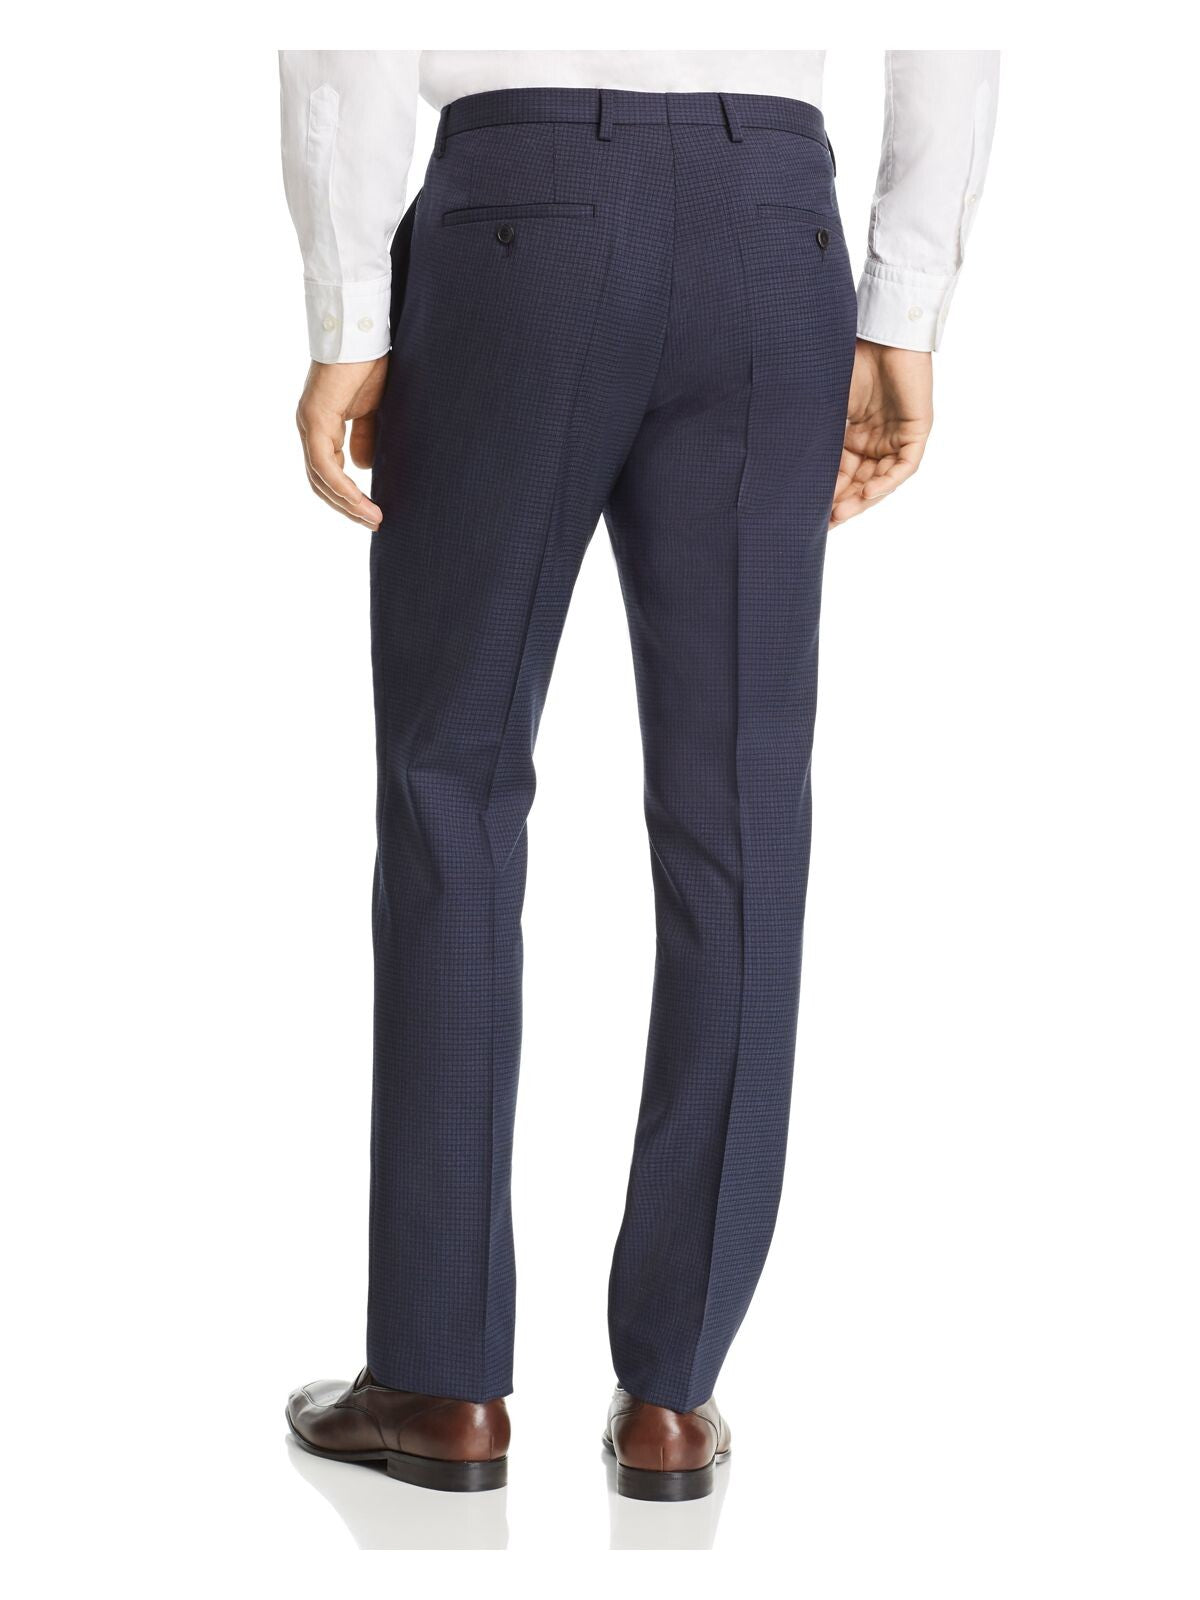 HUGO BOSS Mens Black Label Navy Flat Front, Tapered, Check Regular Fit Wool Blend Suit Separate Pants 38R